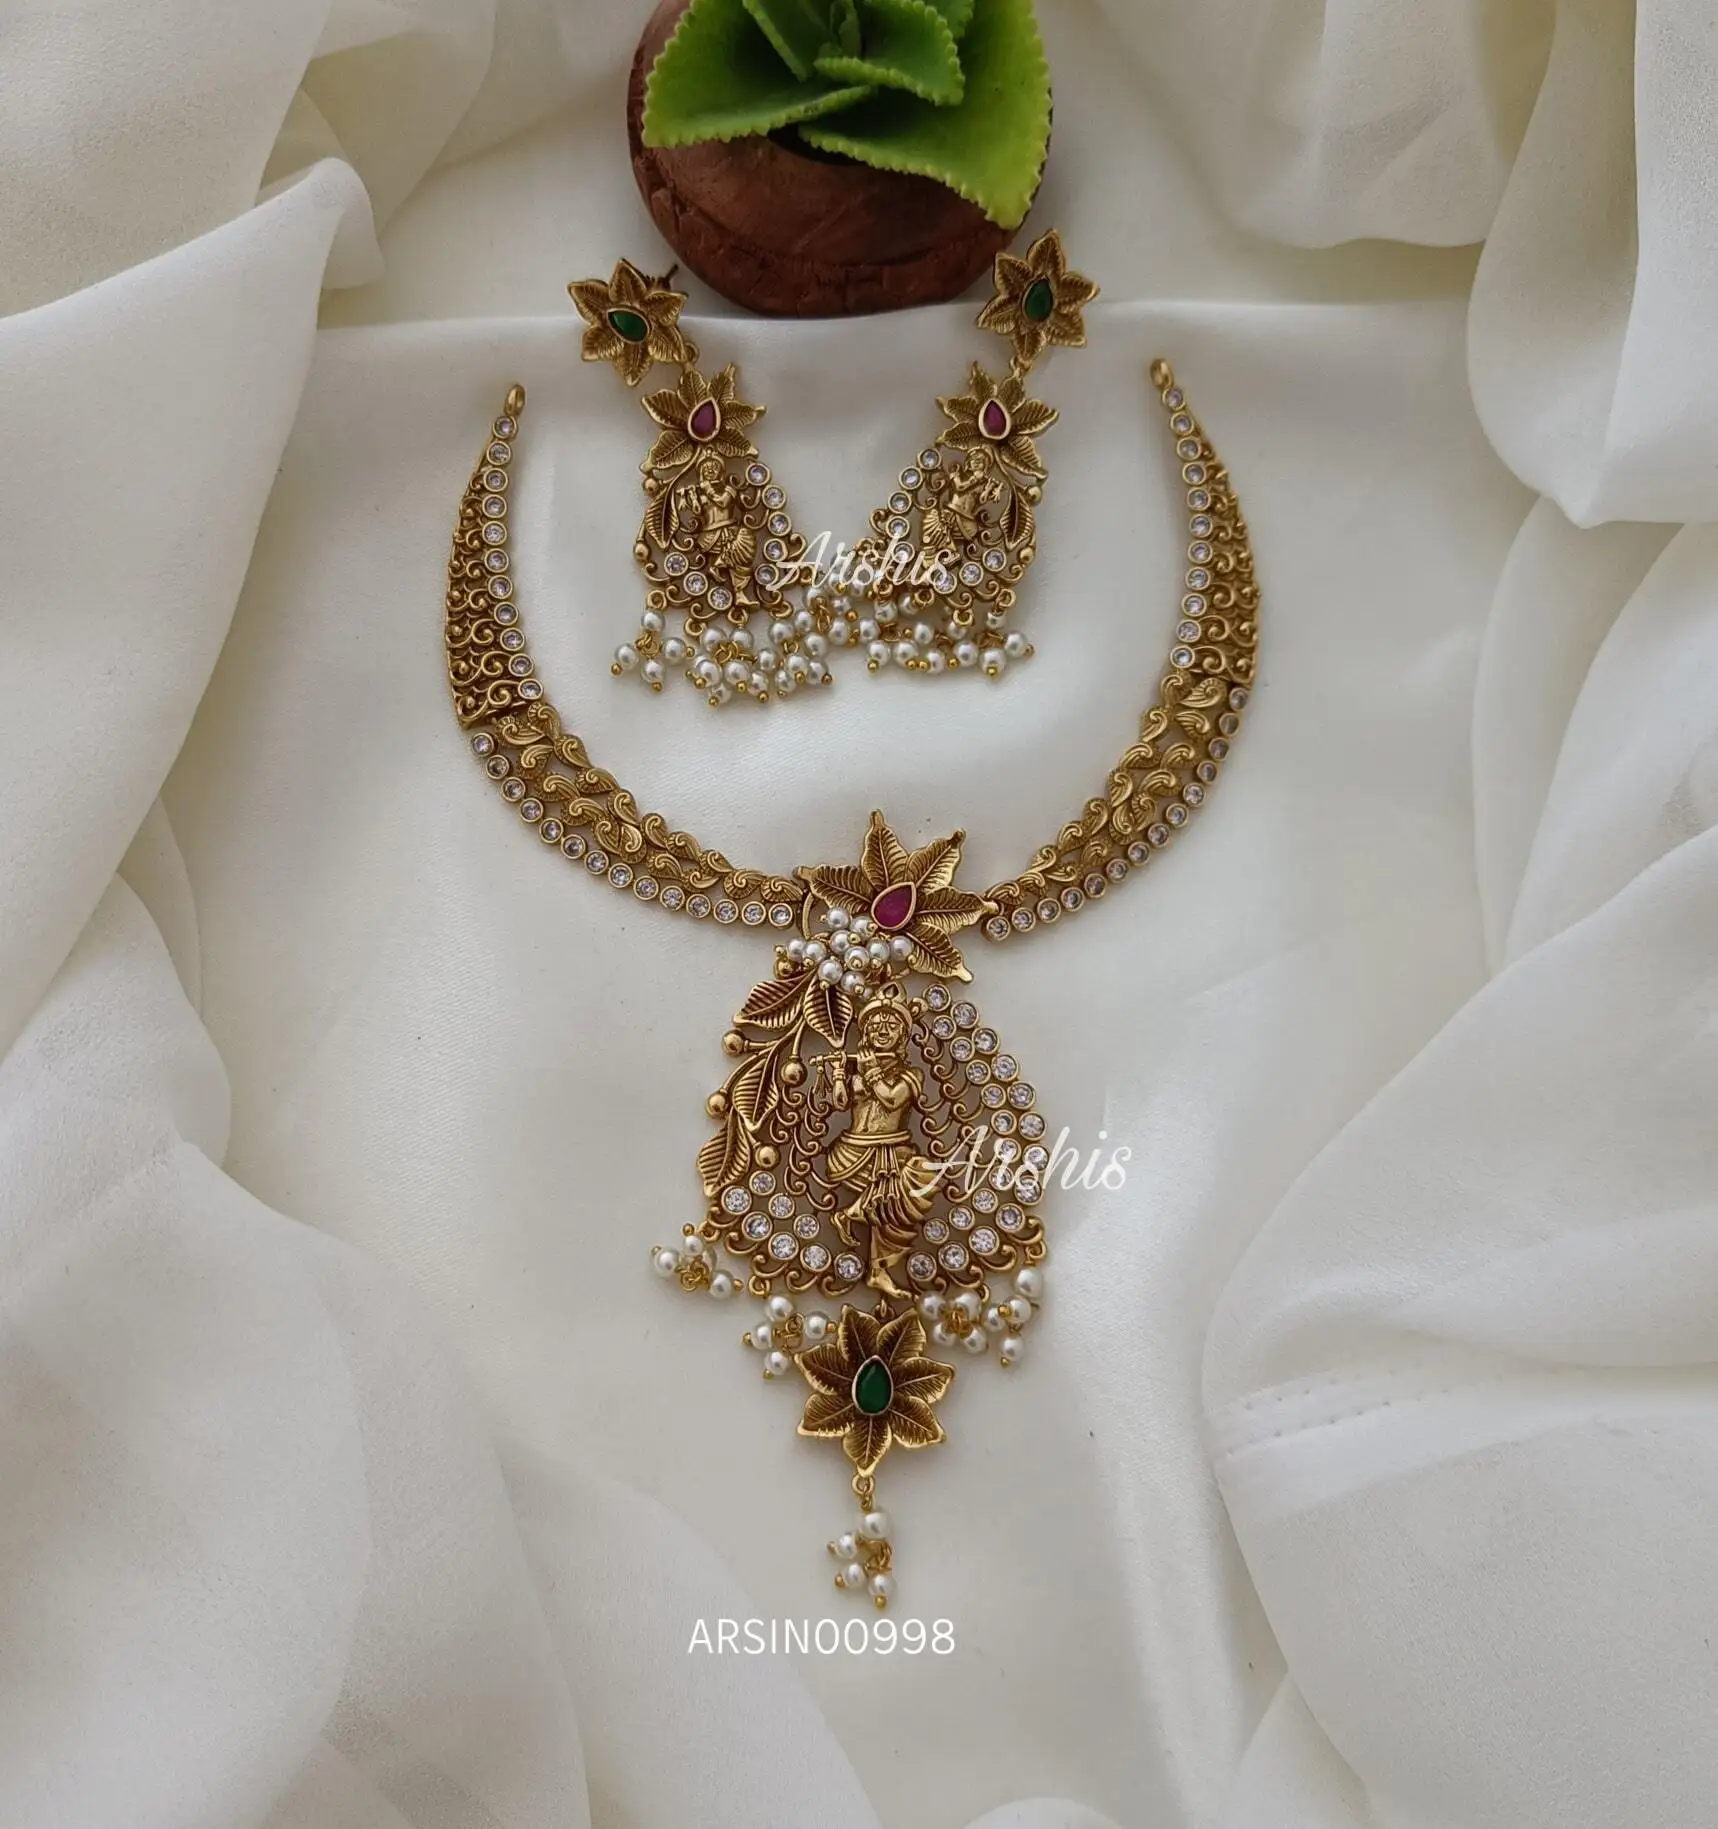 Grand Krishna Pendant Necklace